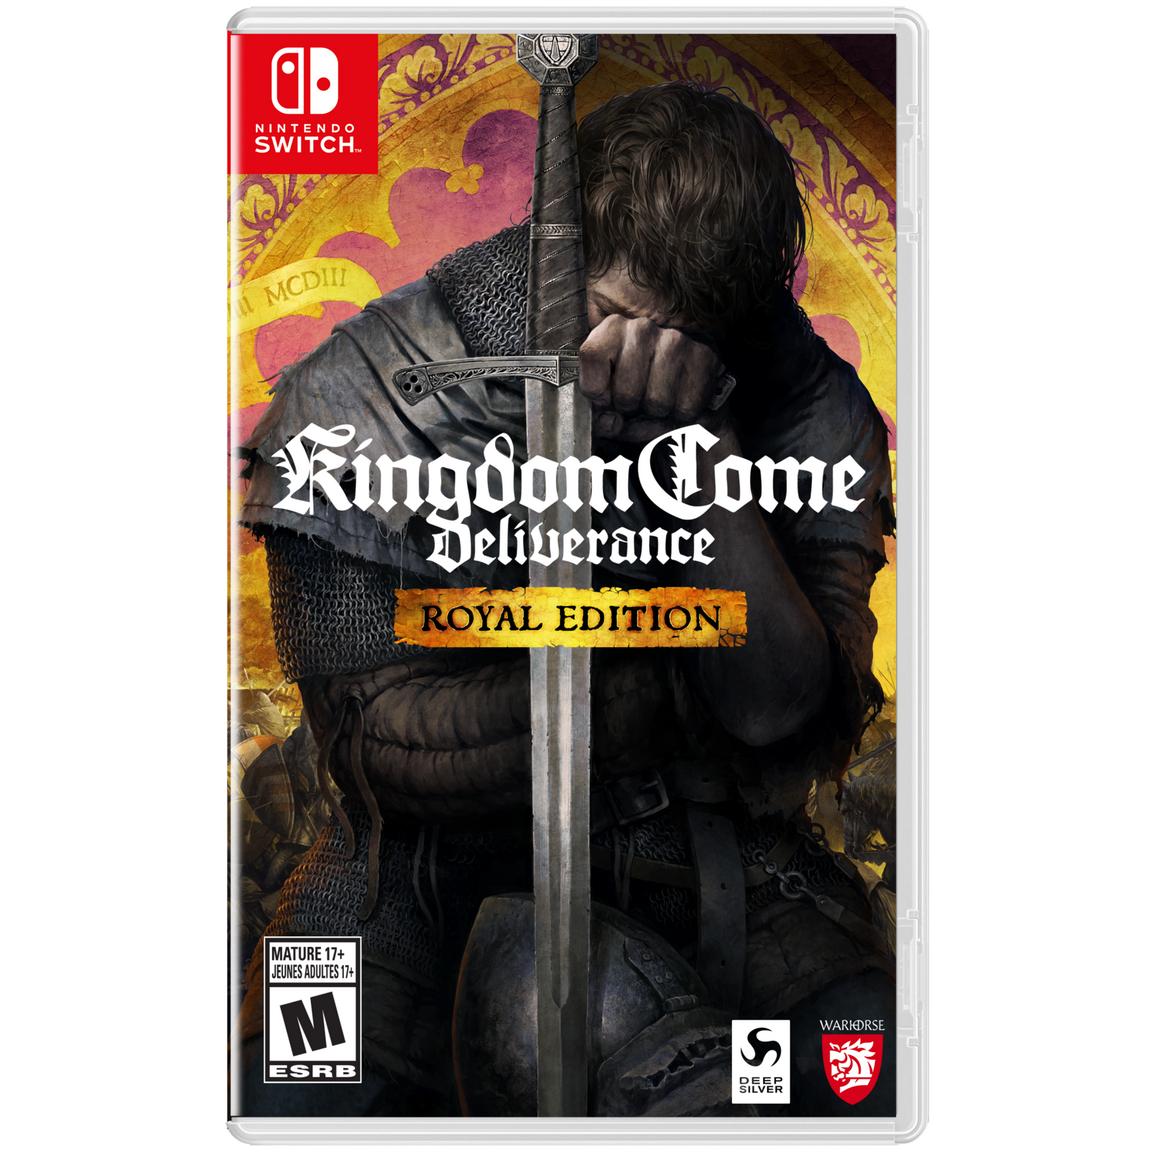 Видеоигра Kingdom Come Deliverance: Royal Edition - Nintendo Switch игра для пк warhorse studios kingdom come deliverance royal edition